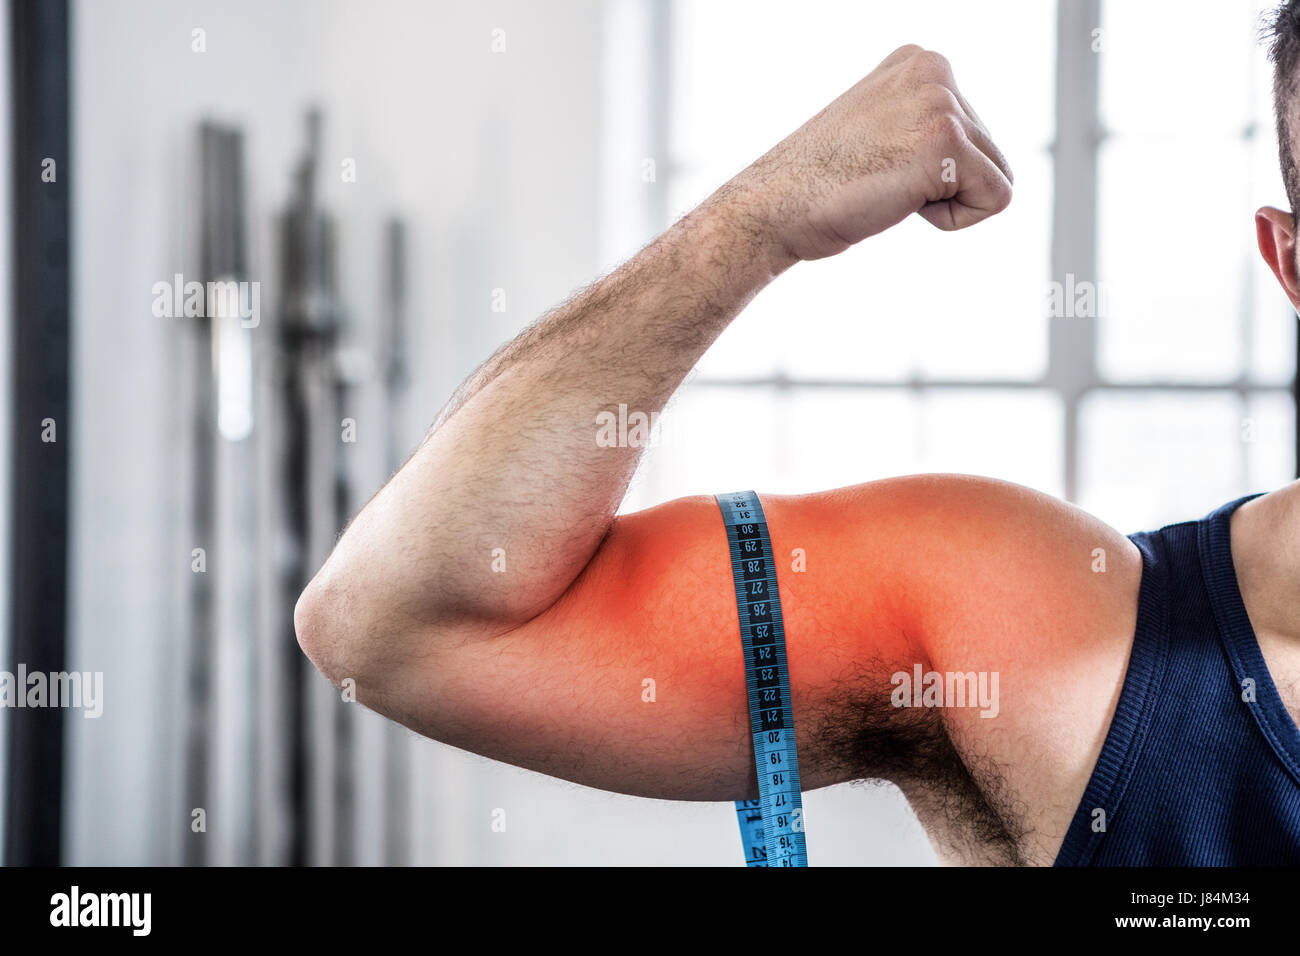 https://c8.alamy.com/comp/J84M34/digital-composite-of-highlighted-arm-of-man-measuring-biceps-with-J84M34.jpg